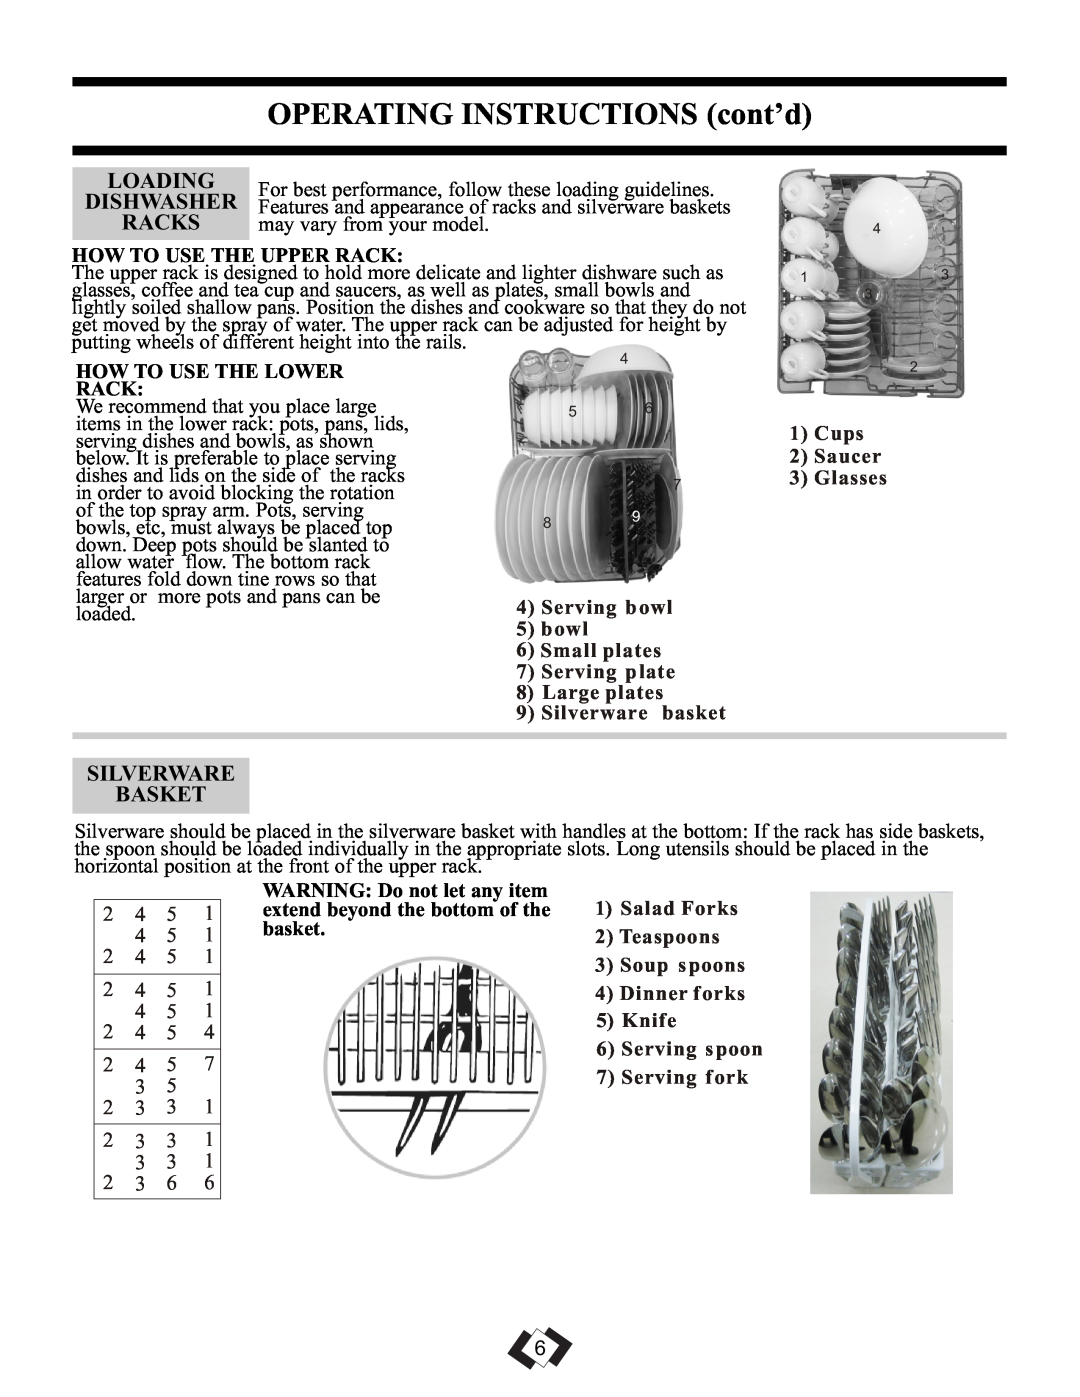 Danby DDW1899WP-1 OPERATING INSTRUCTIONS cont’d, Loading, Dishwasher, Racks, Silverware Basket, Silverware basket 